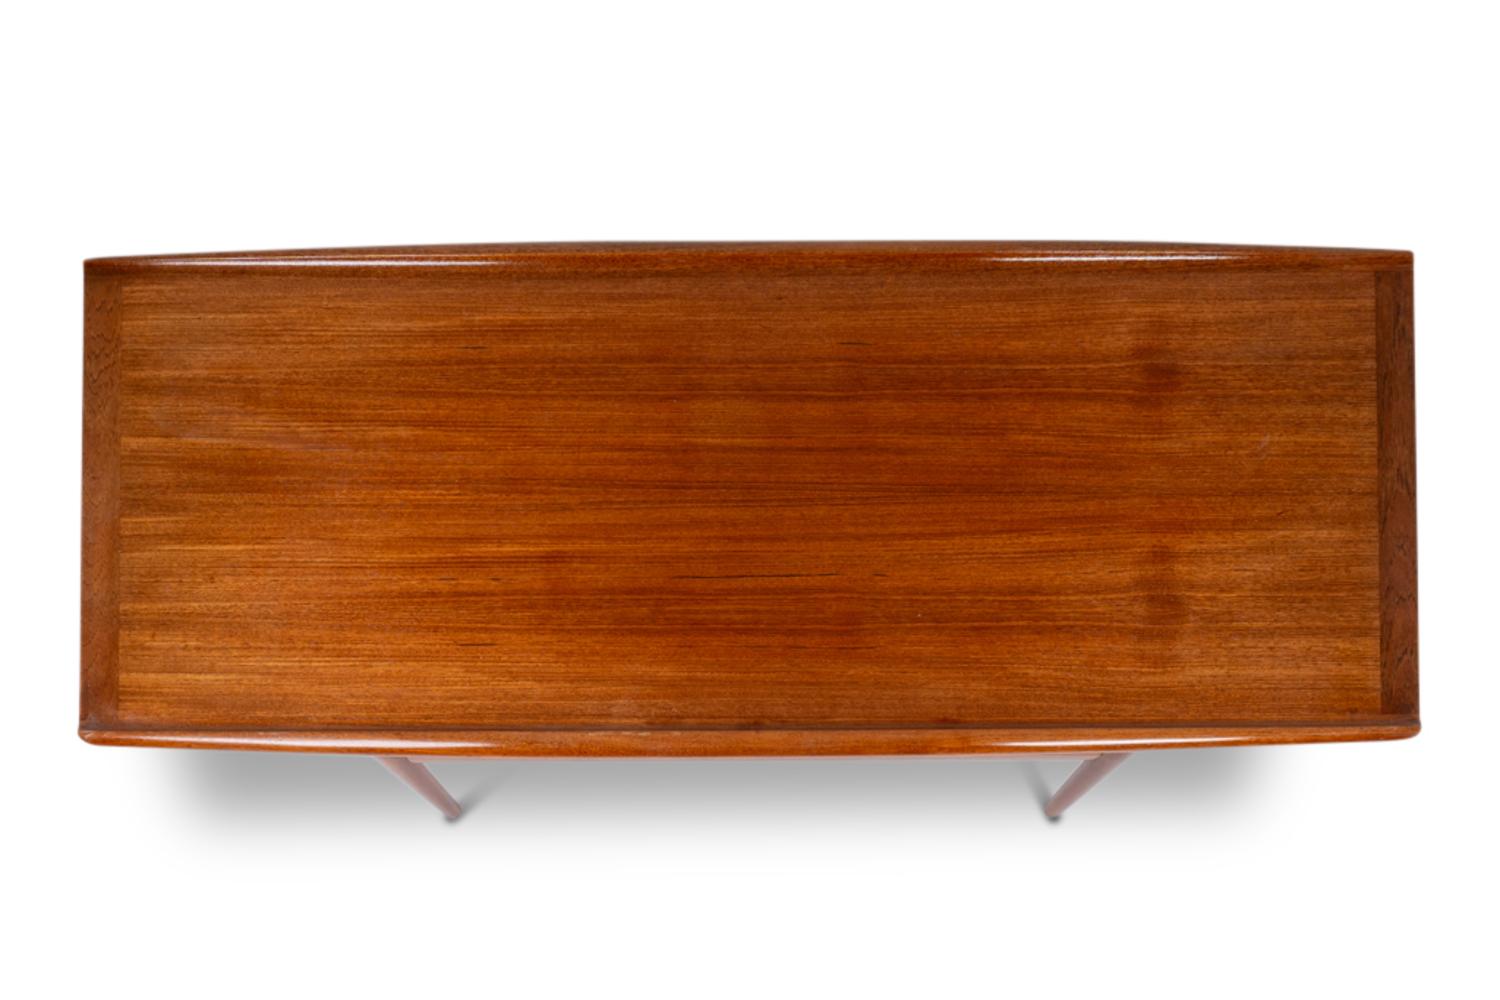 Teak Grete Jalk for Glostrup. “GJ106” coffee table in teak. 1960s. For Sale